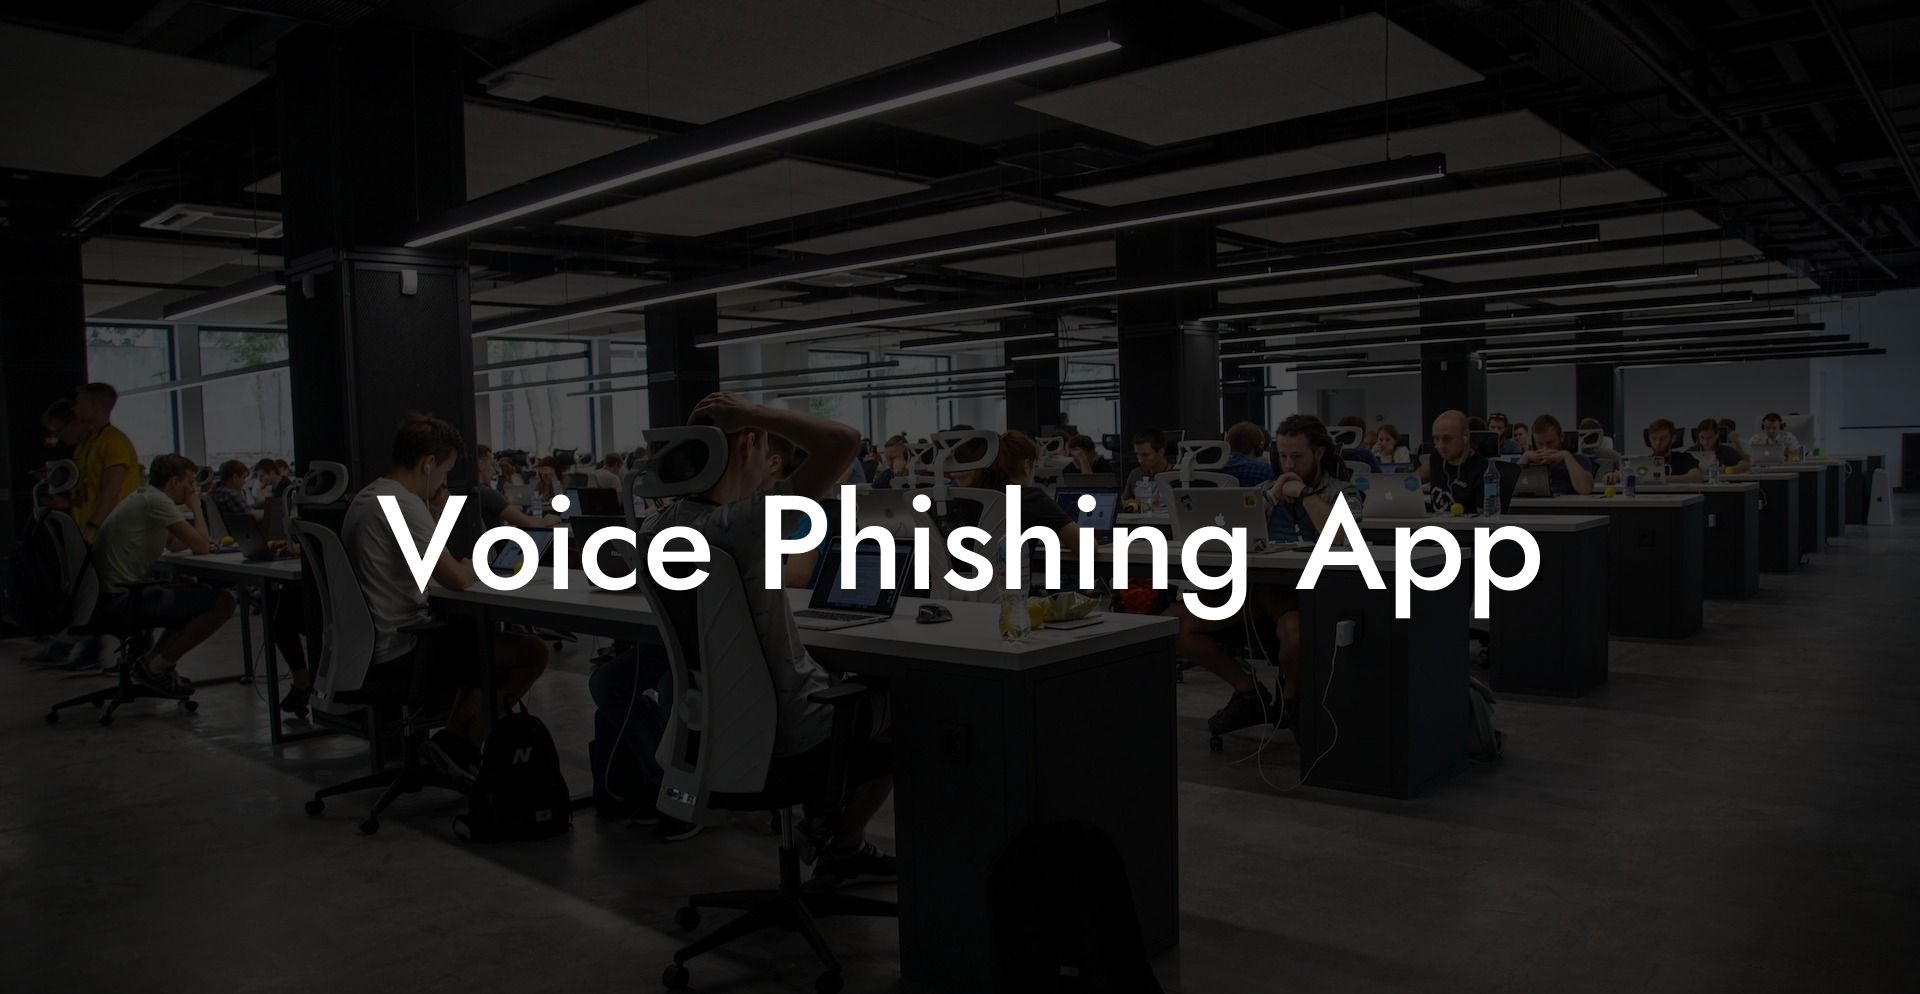 Voice Phishing App